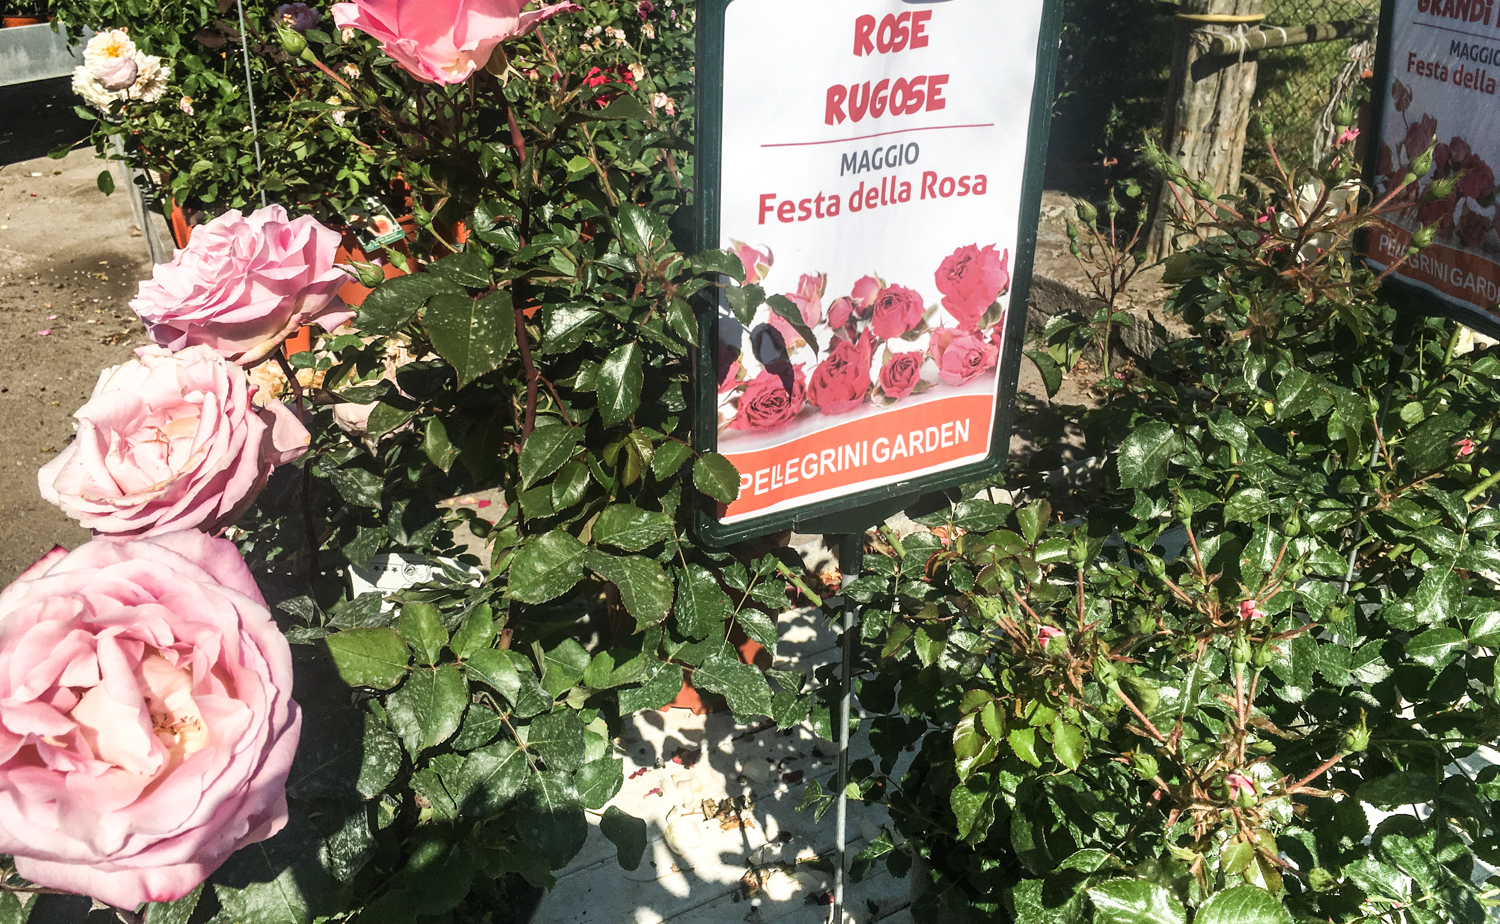 rose rugose